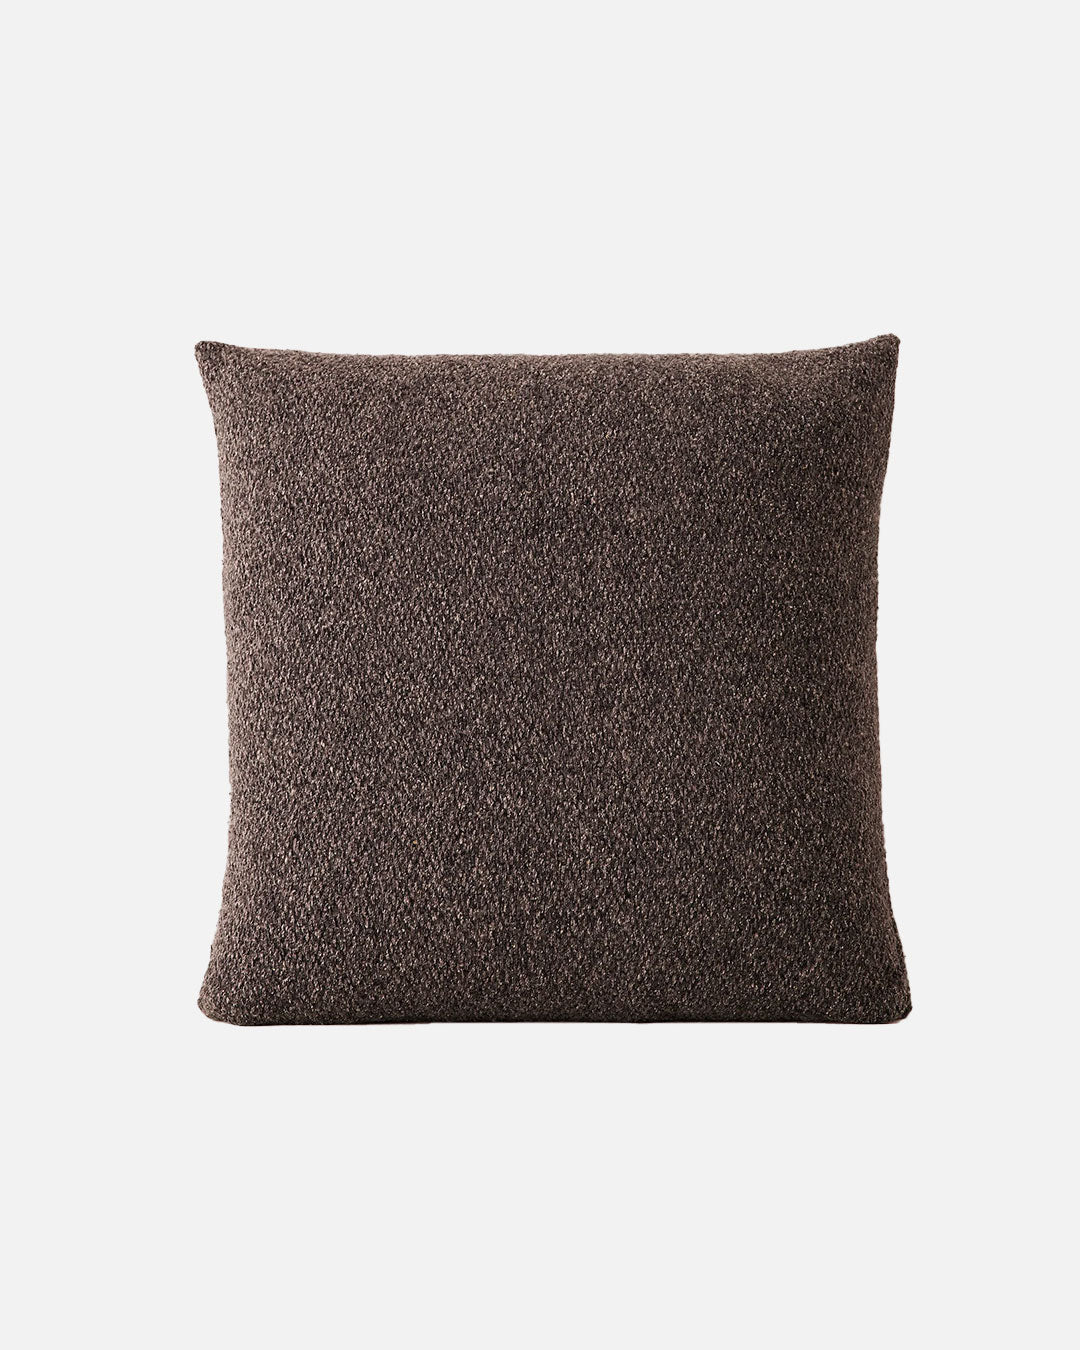 Urano Square Cushion Cover in Dark Grey